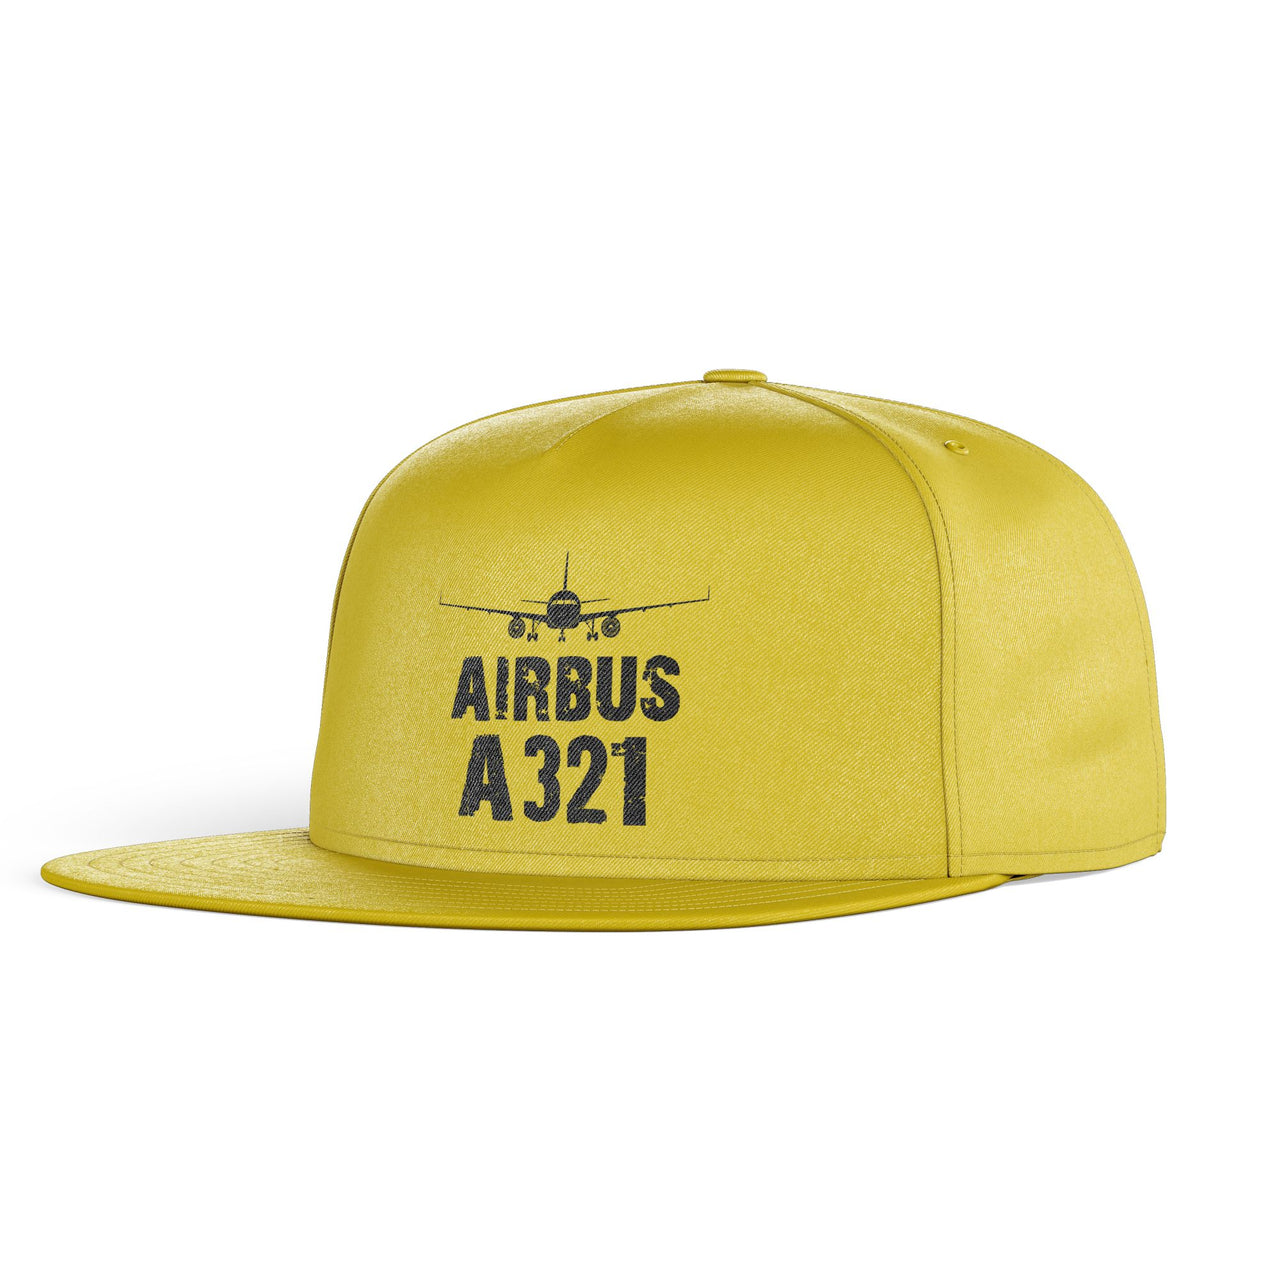 Airbus A321 & Plane Designed Snapback Caps & Hats